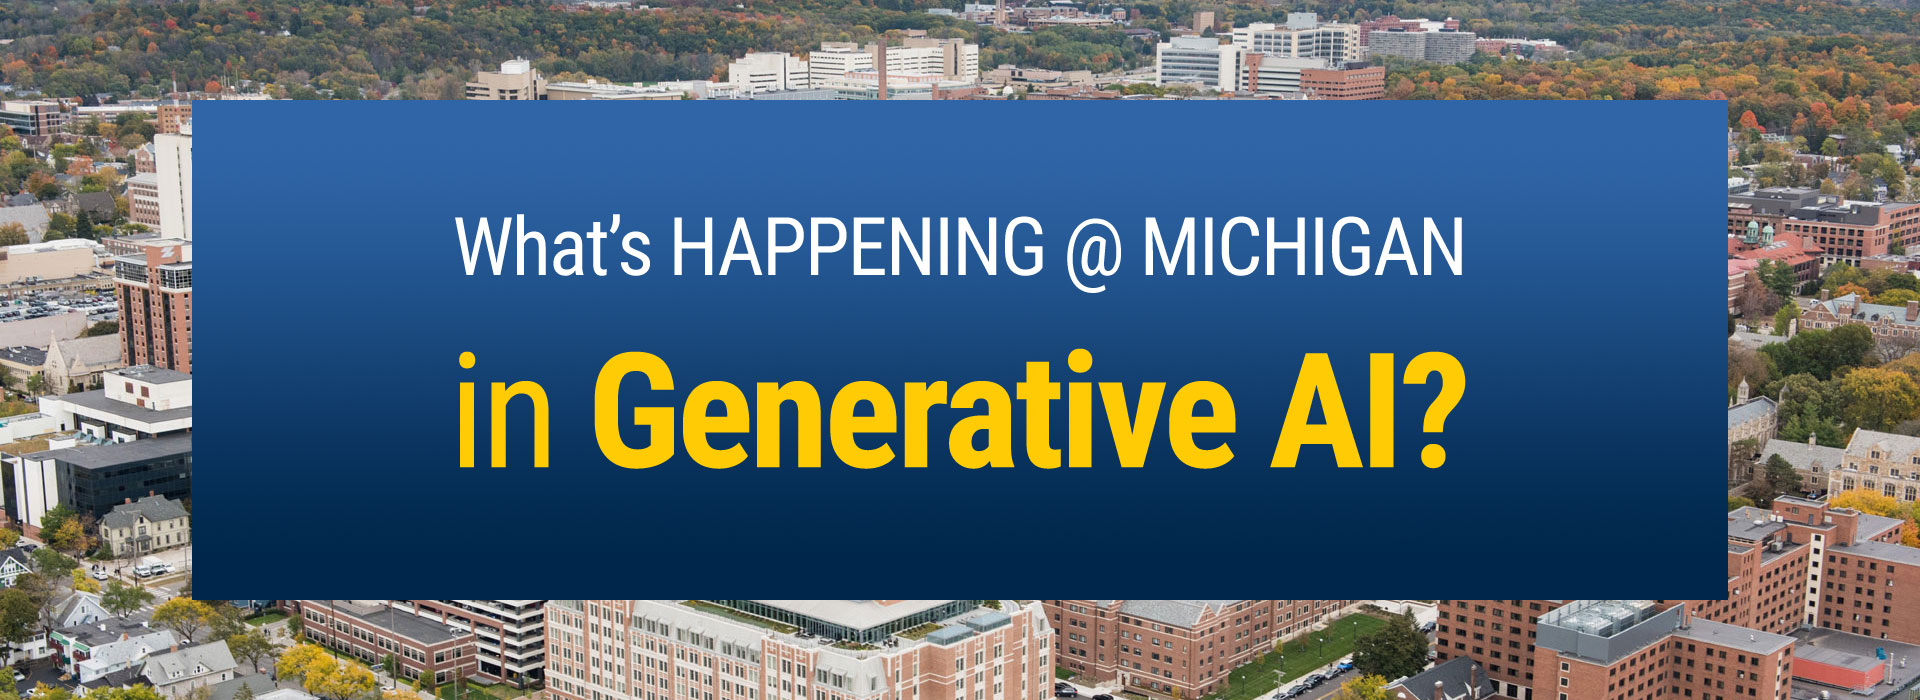 What's Happening @ Michigan in Generative AI